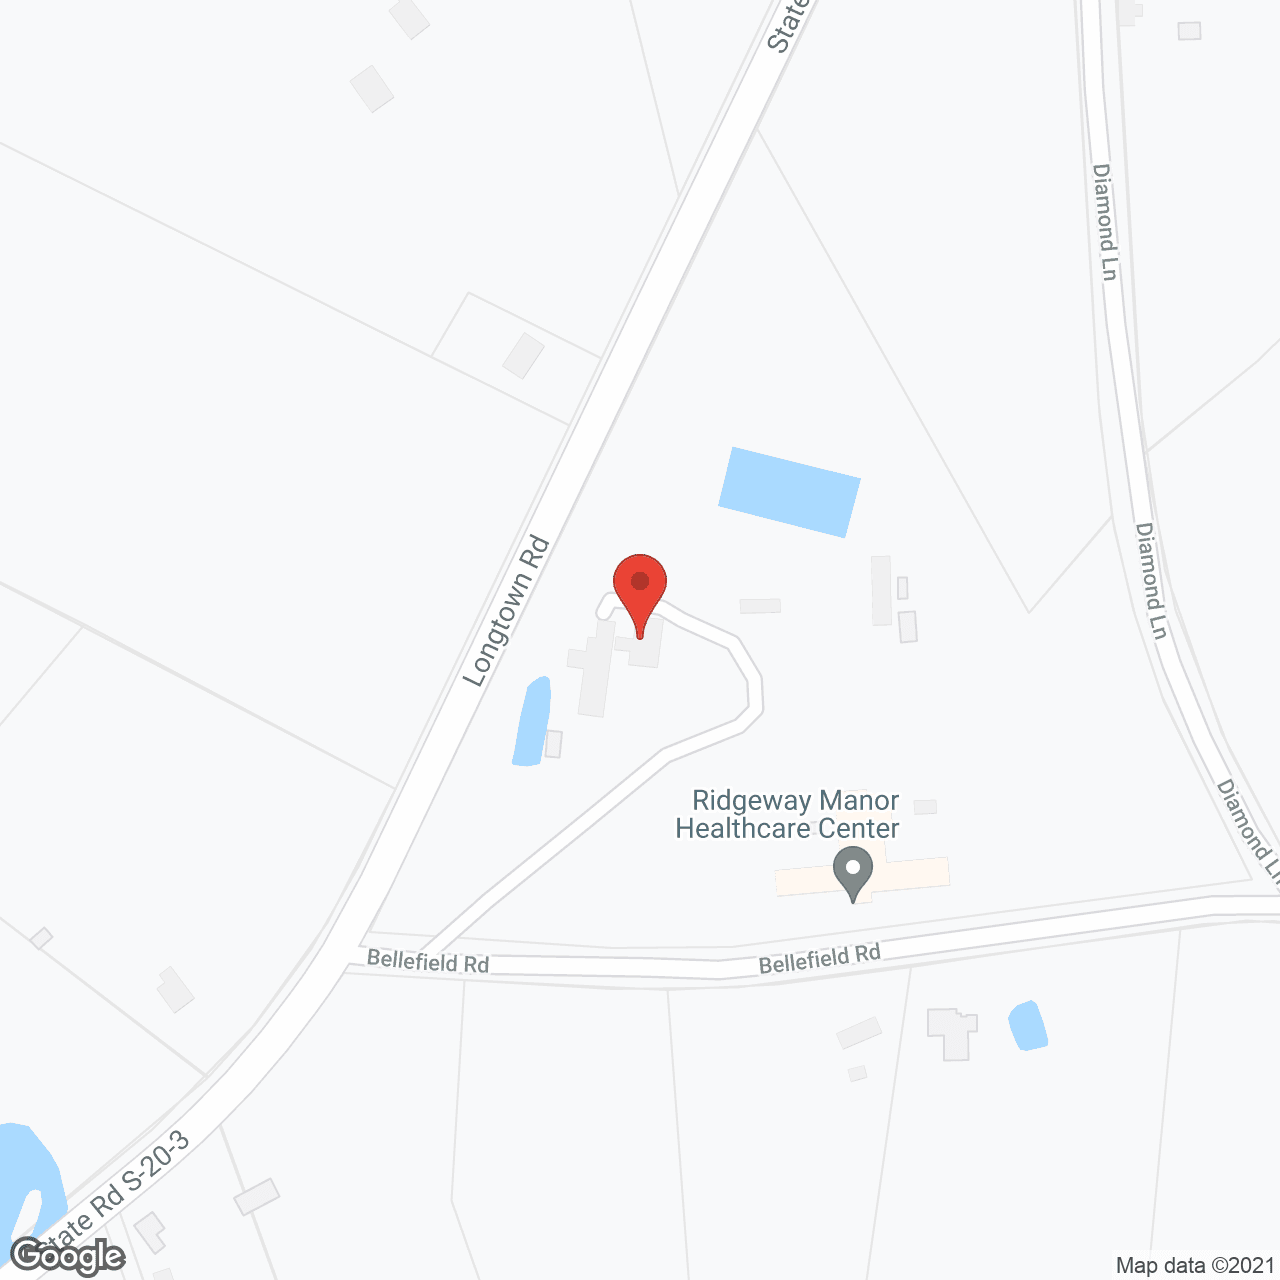 Fairfield Health Care Center in google map